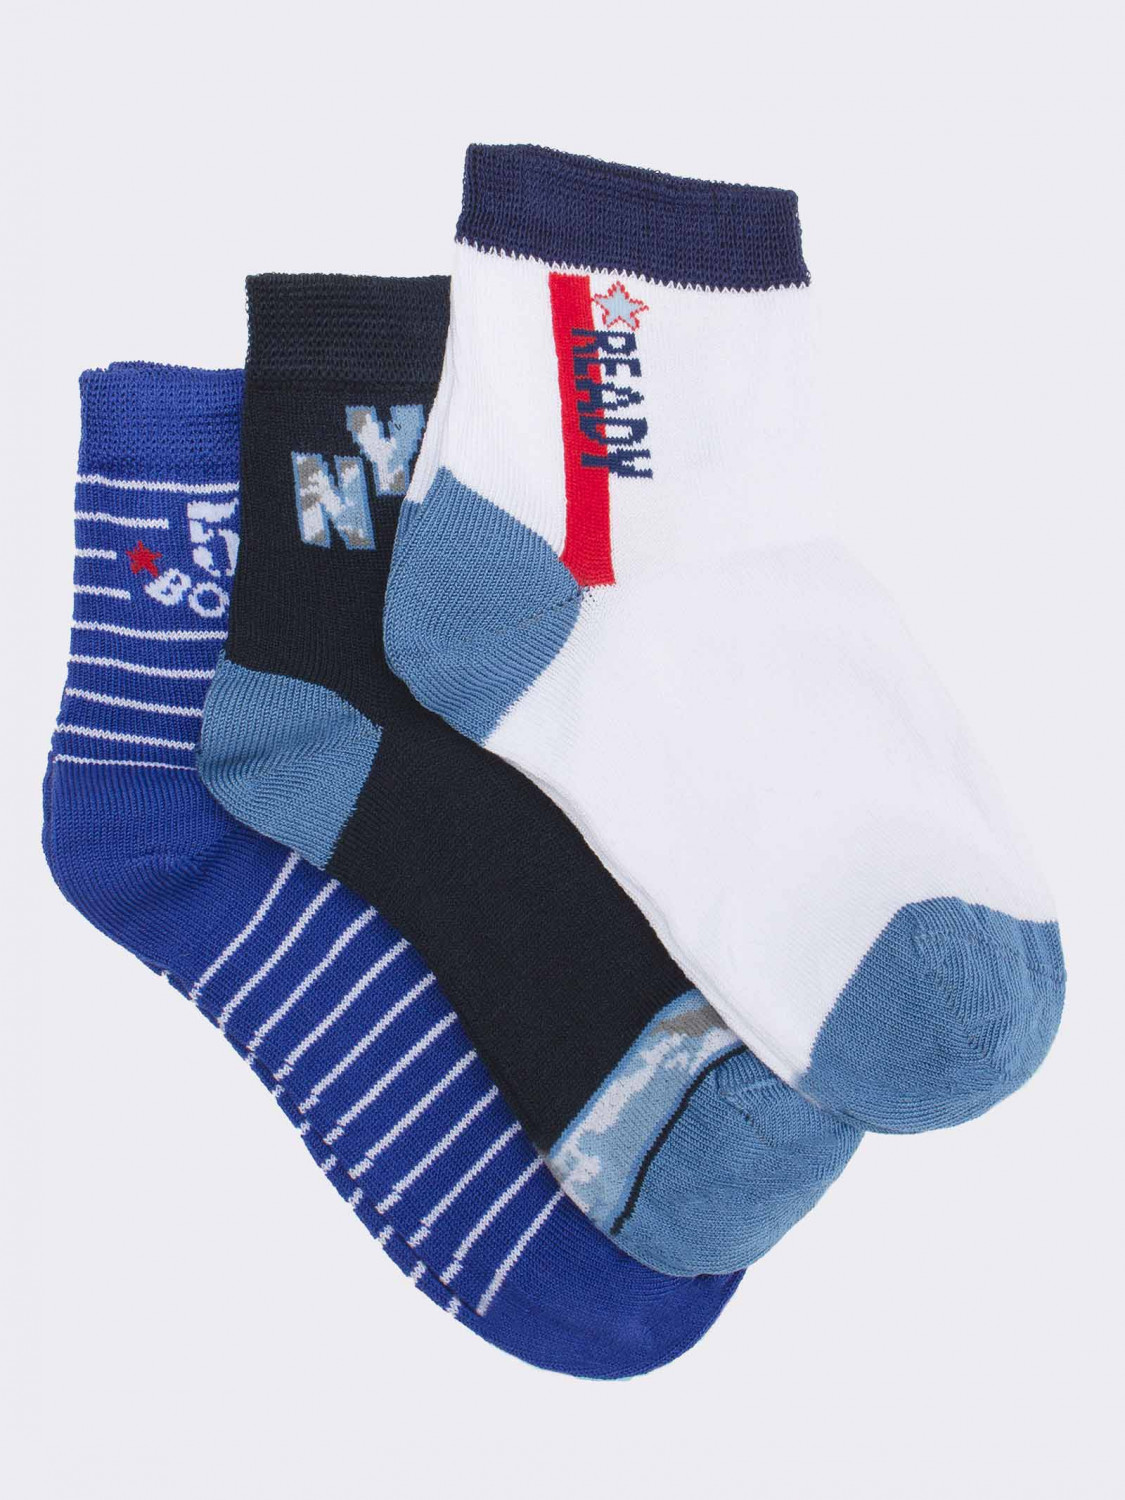 Tris crew socks for child America pattern in fresh Cotton